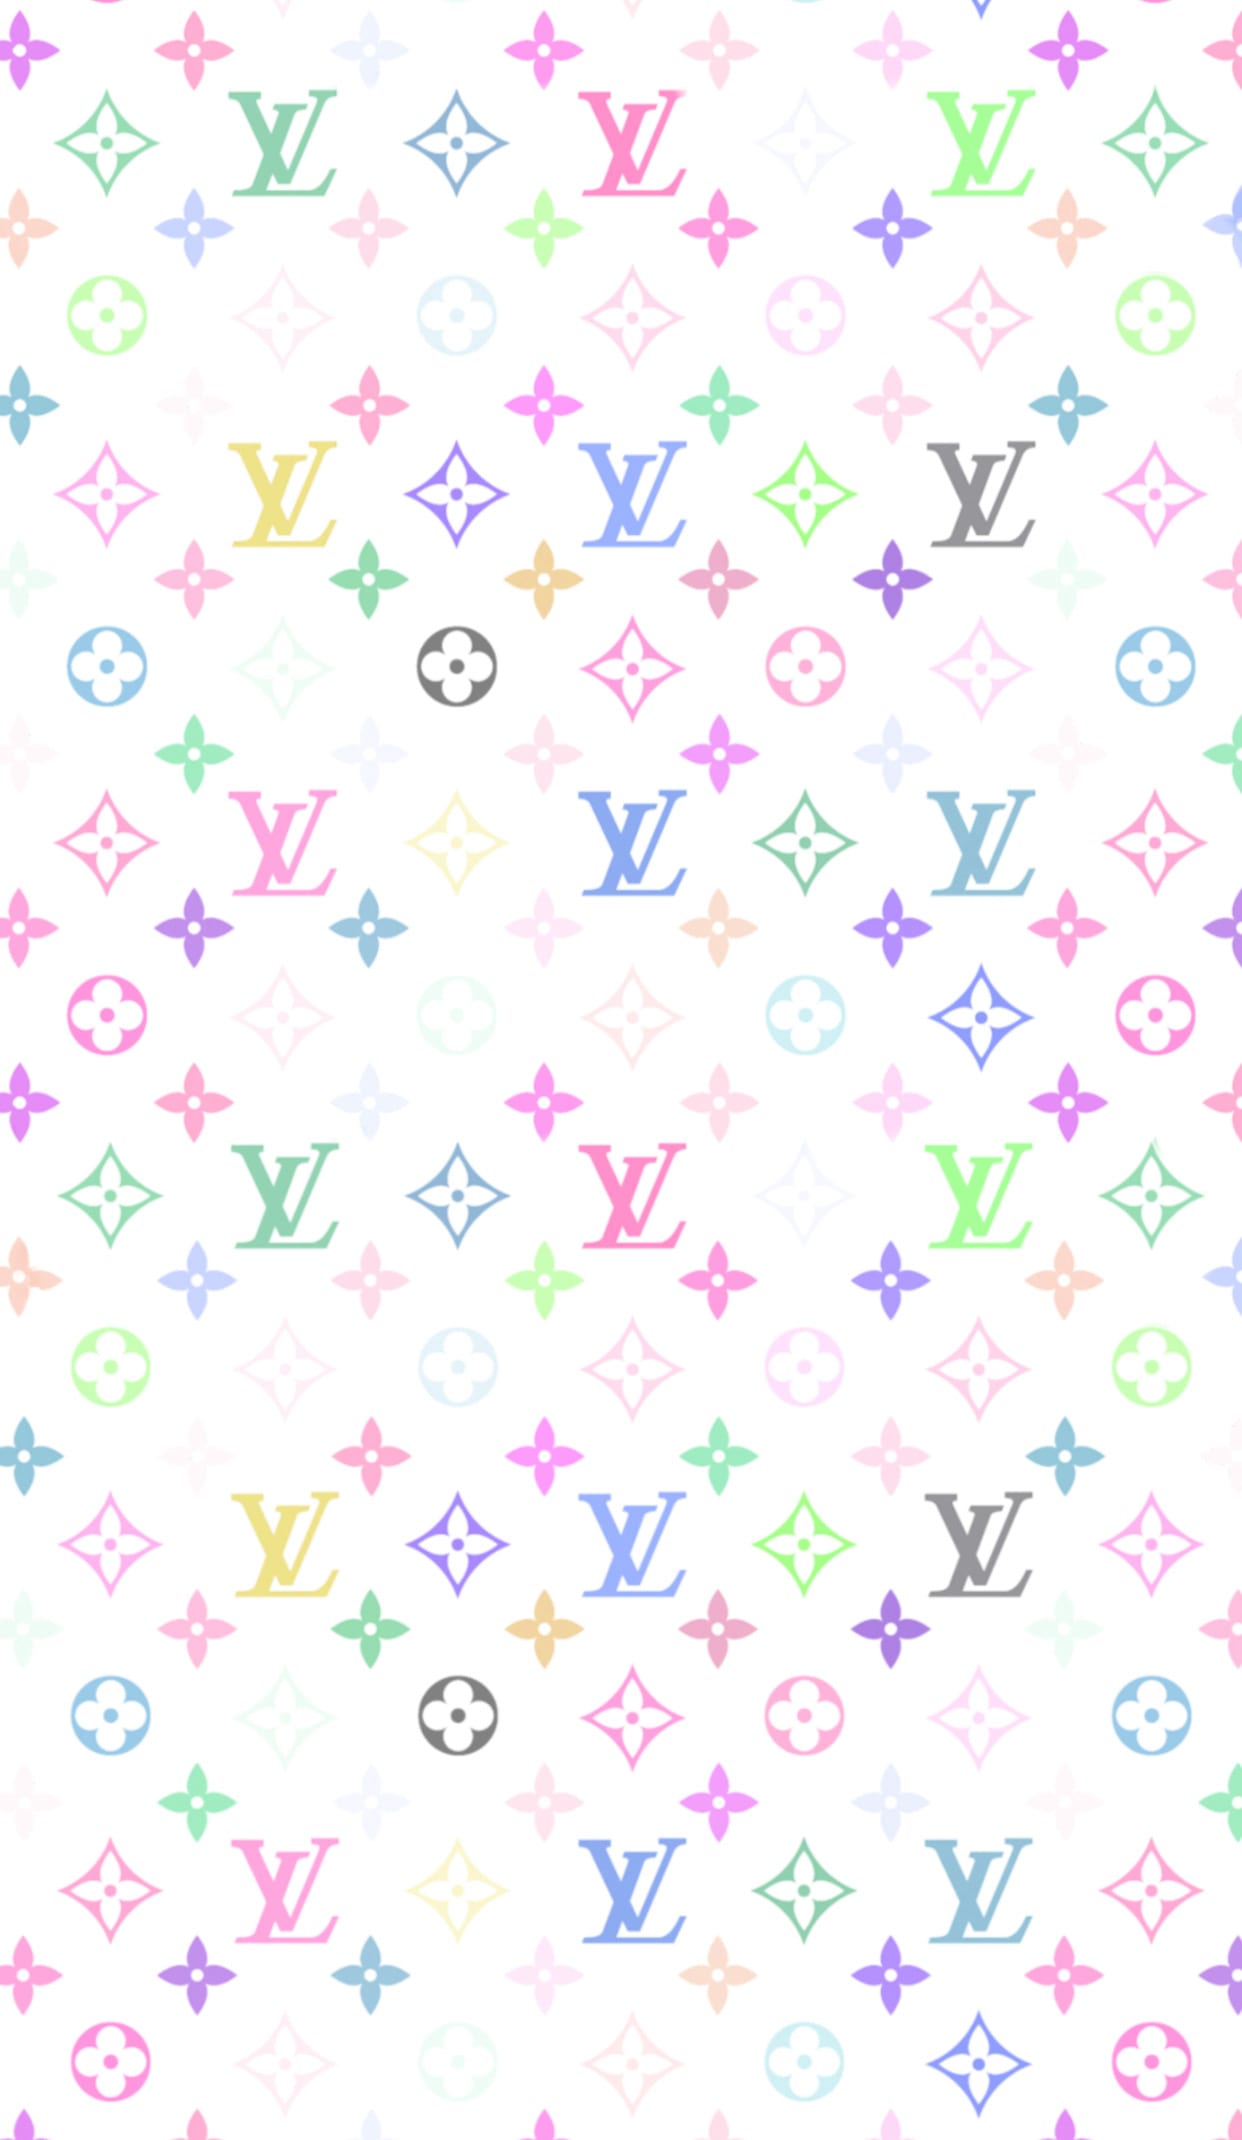 Louis Vuitton Wallpaper iPhone - KoLPaPer - Awesome Free HD Wallpapers